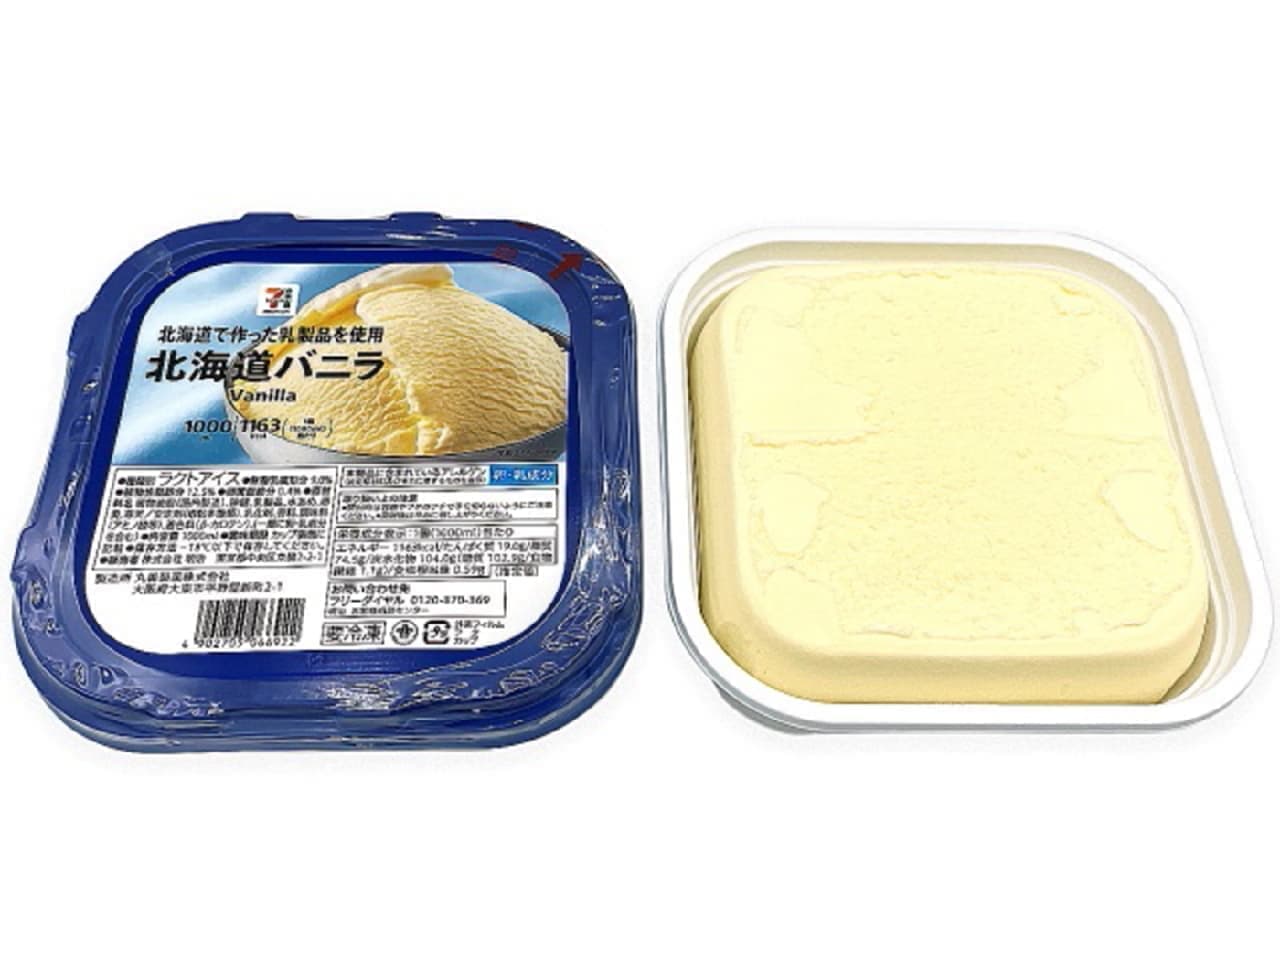 7-ELEVEN "7 Premium Hokkaido Vanilla 1000ml